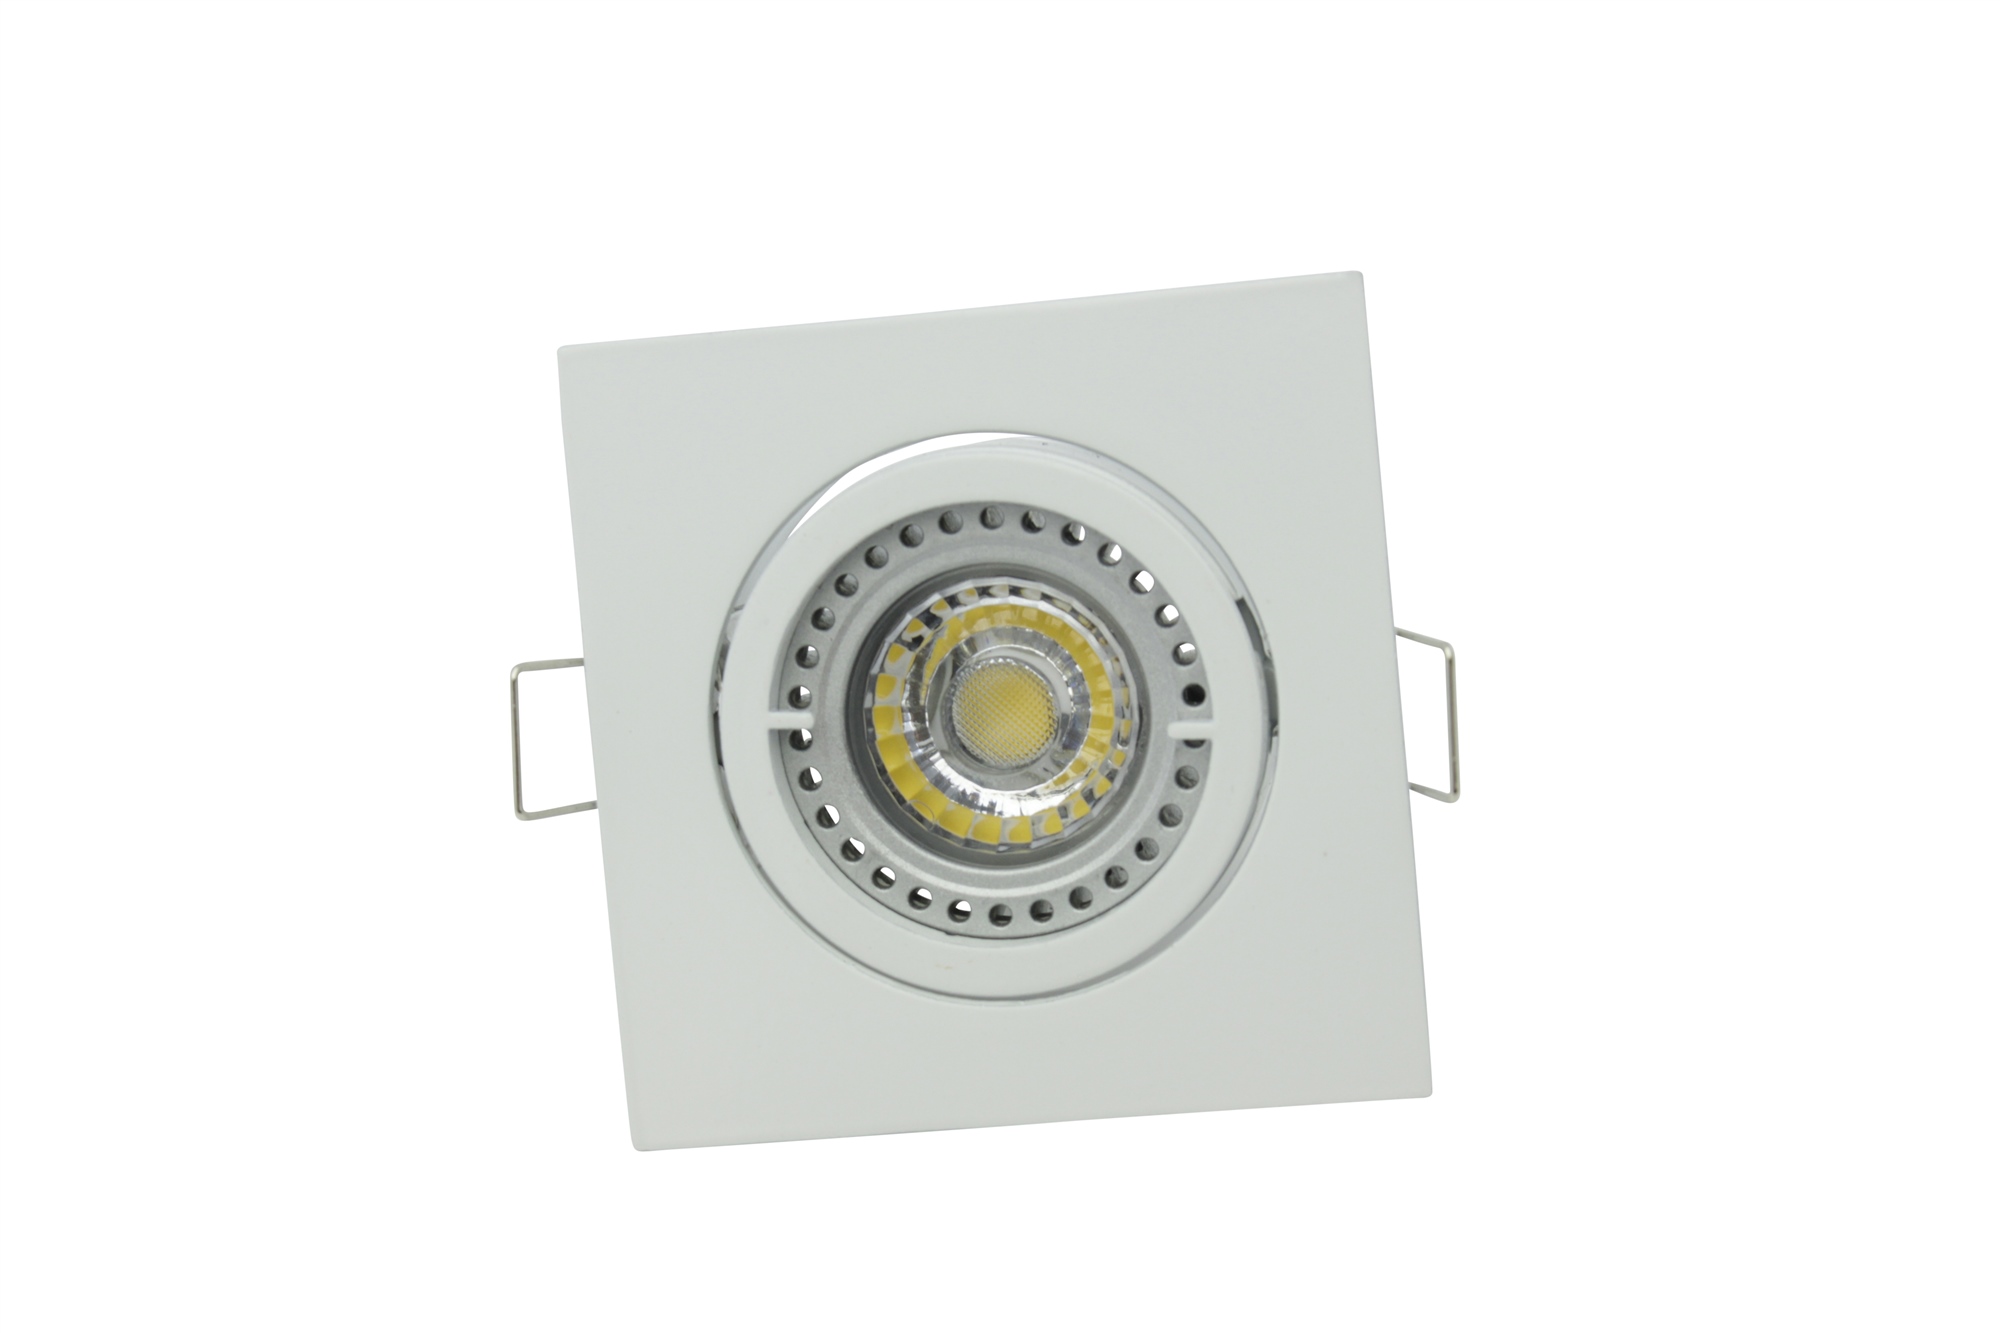 Lampenlux LED-Einbaustrahler Spot Snap eckig weiß schwenkbar 8.2x8.2cm 12V MR16 rostfrei Aluminium